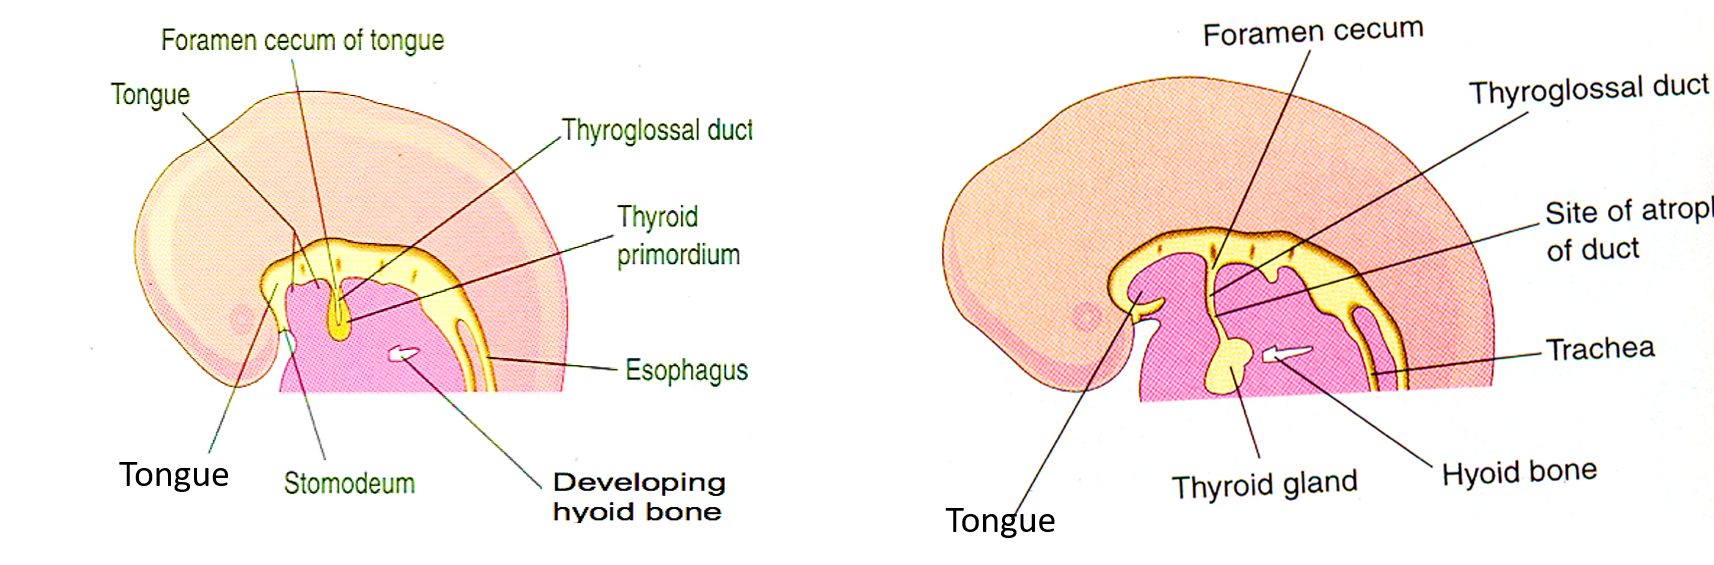 Development of thyroid gland